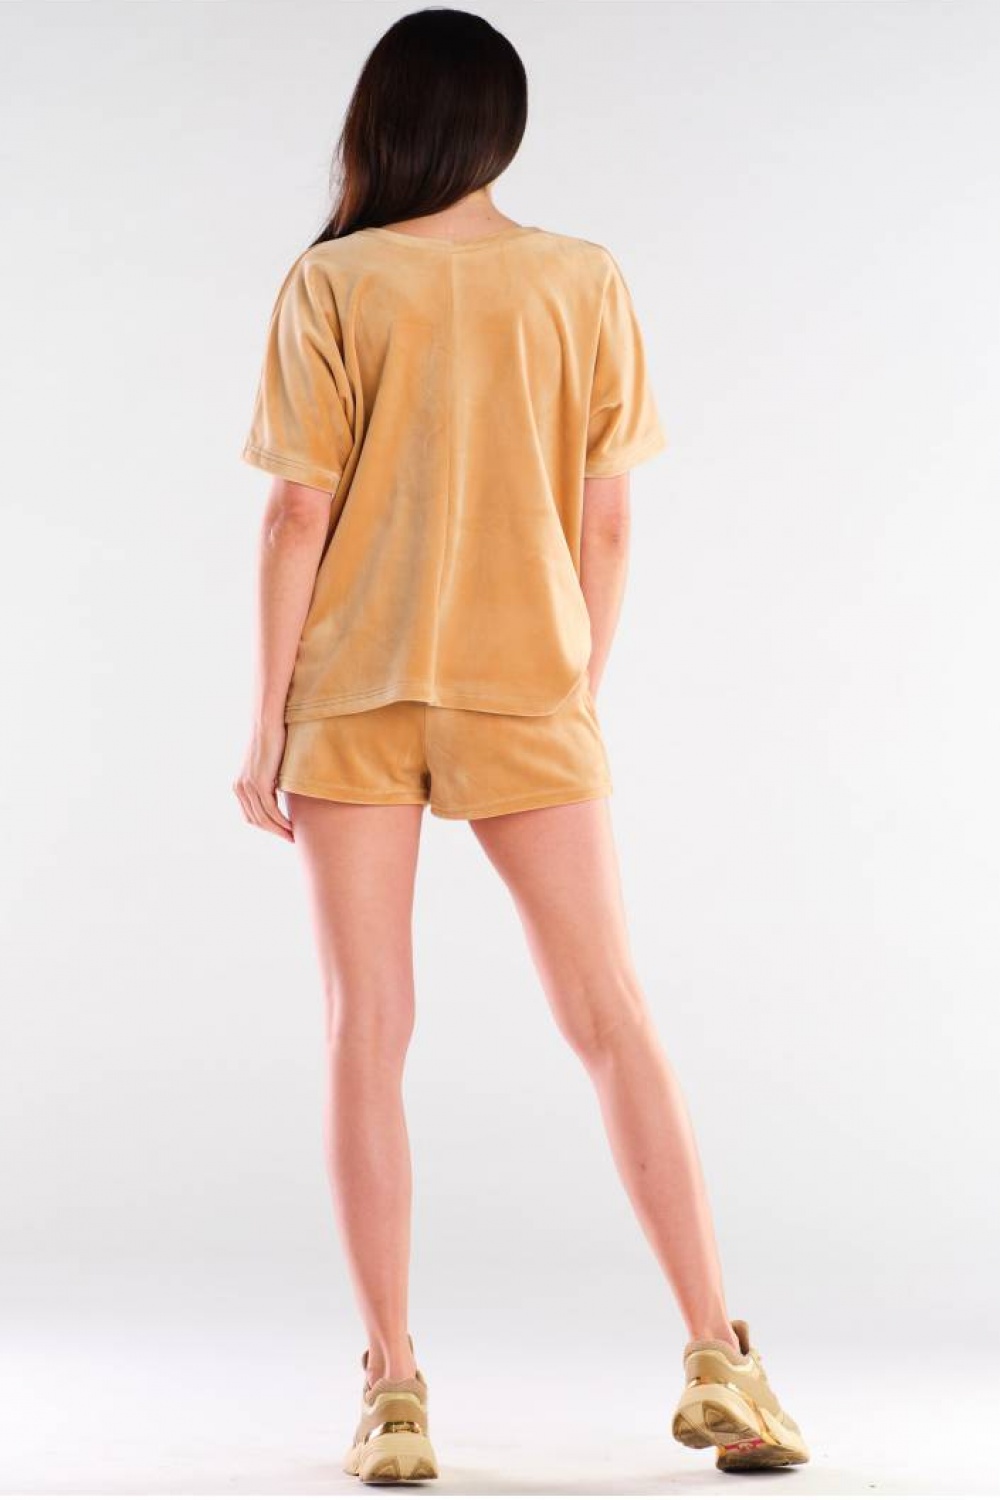  Shorts model 154795 awama  beige